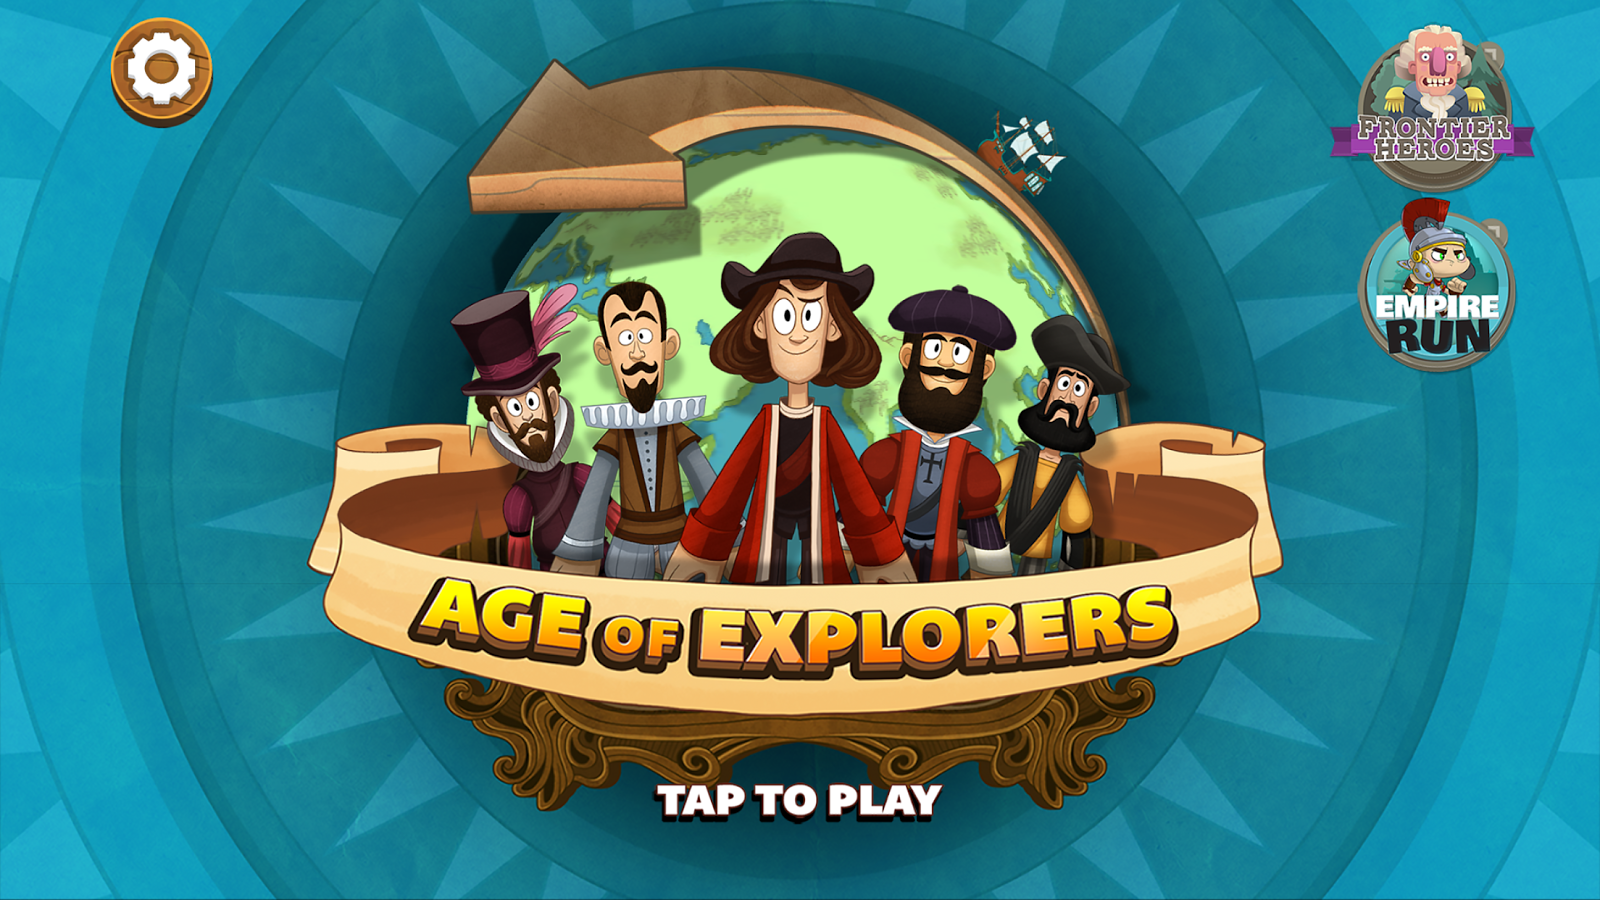 Age of Explorers